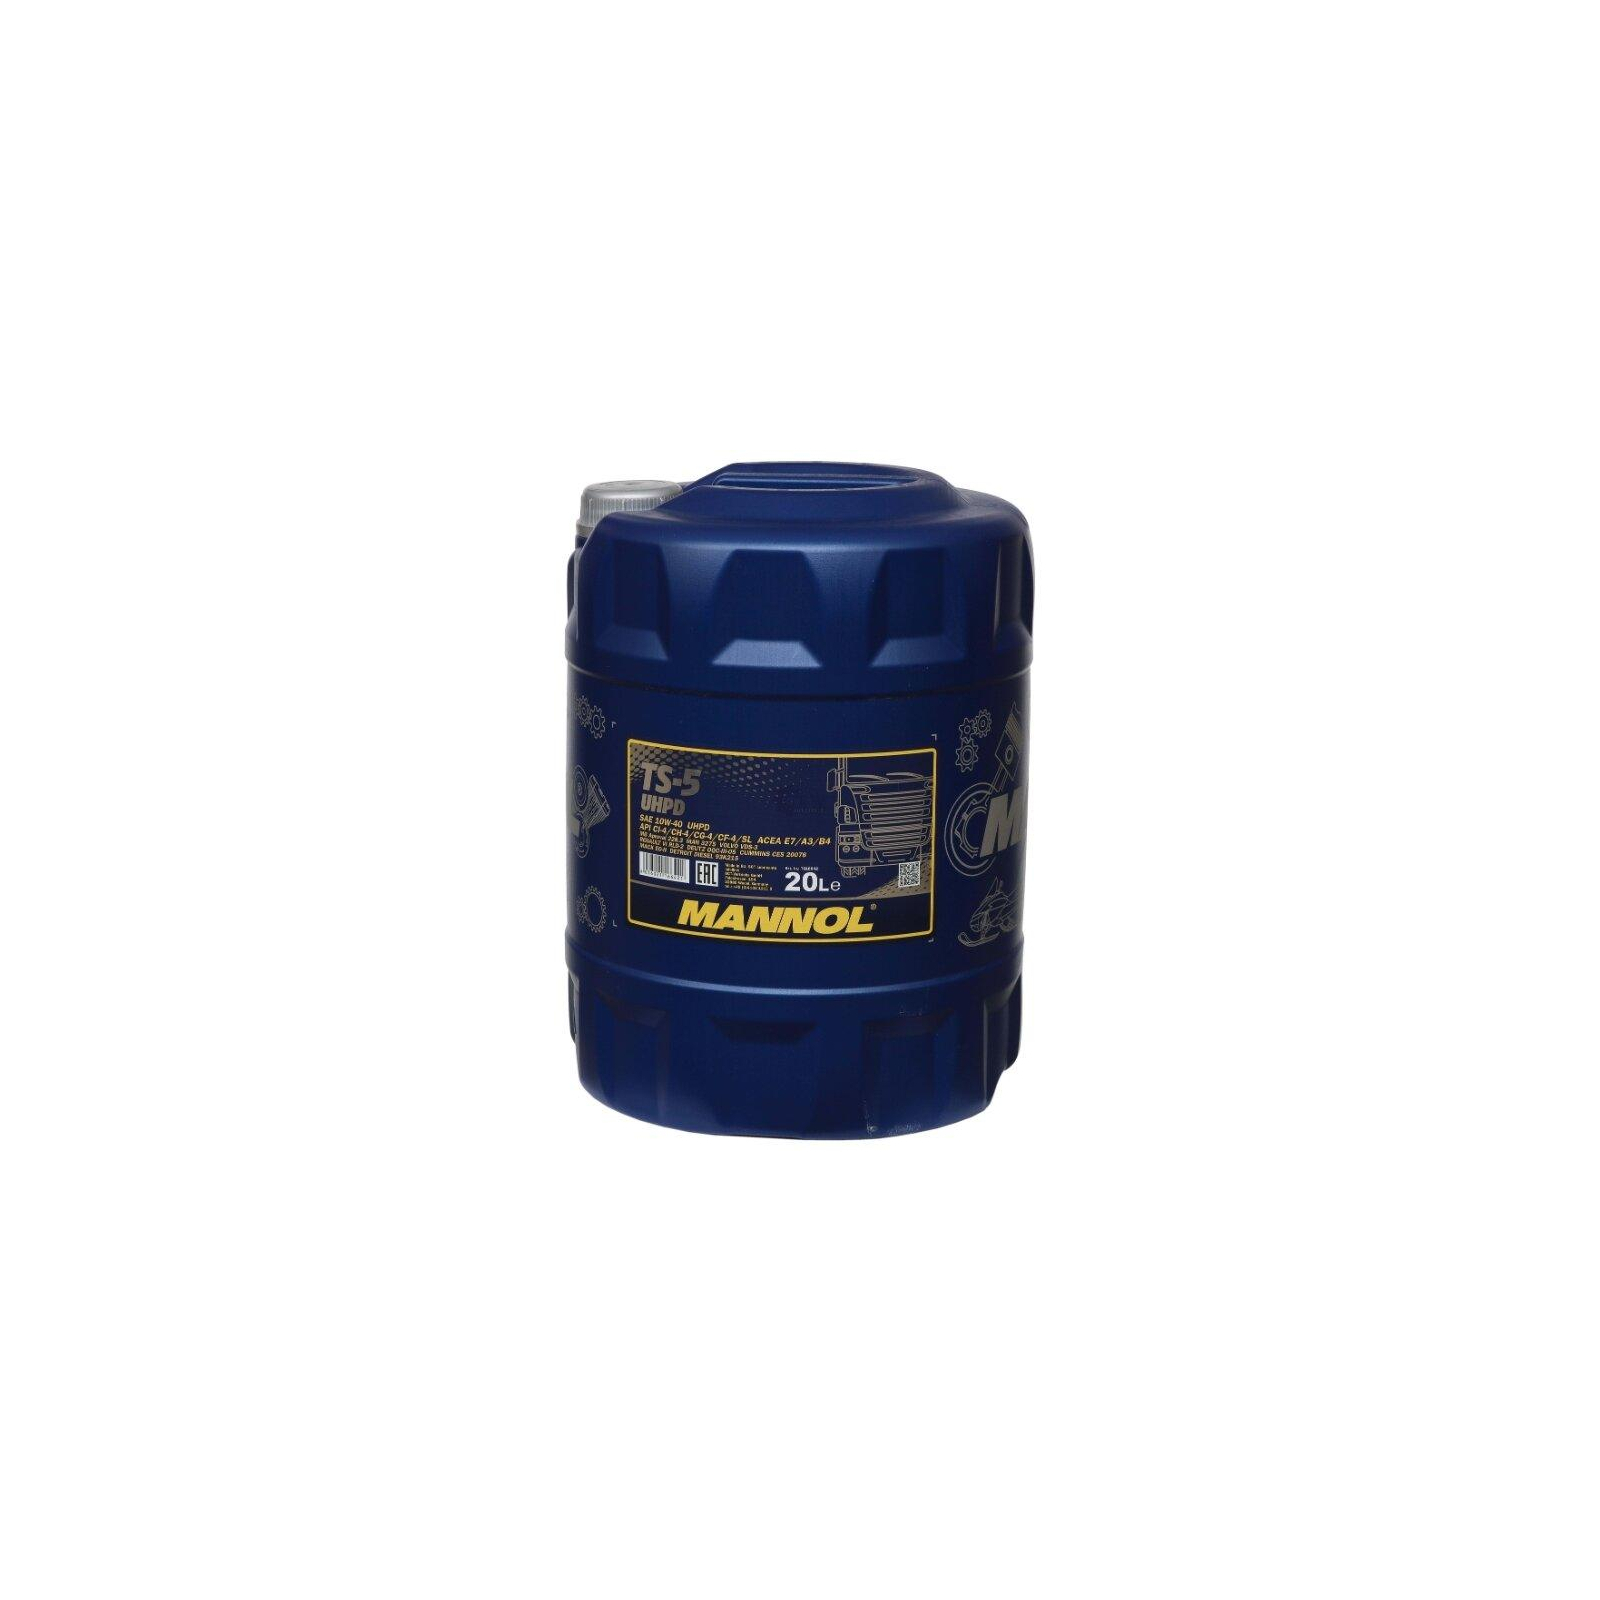 Моторное масло Mannol TS-5 UHPD 10л10W-40 (MN7105-10) изображение 2